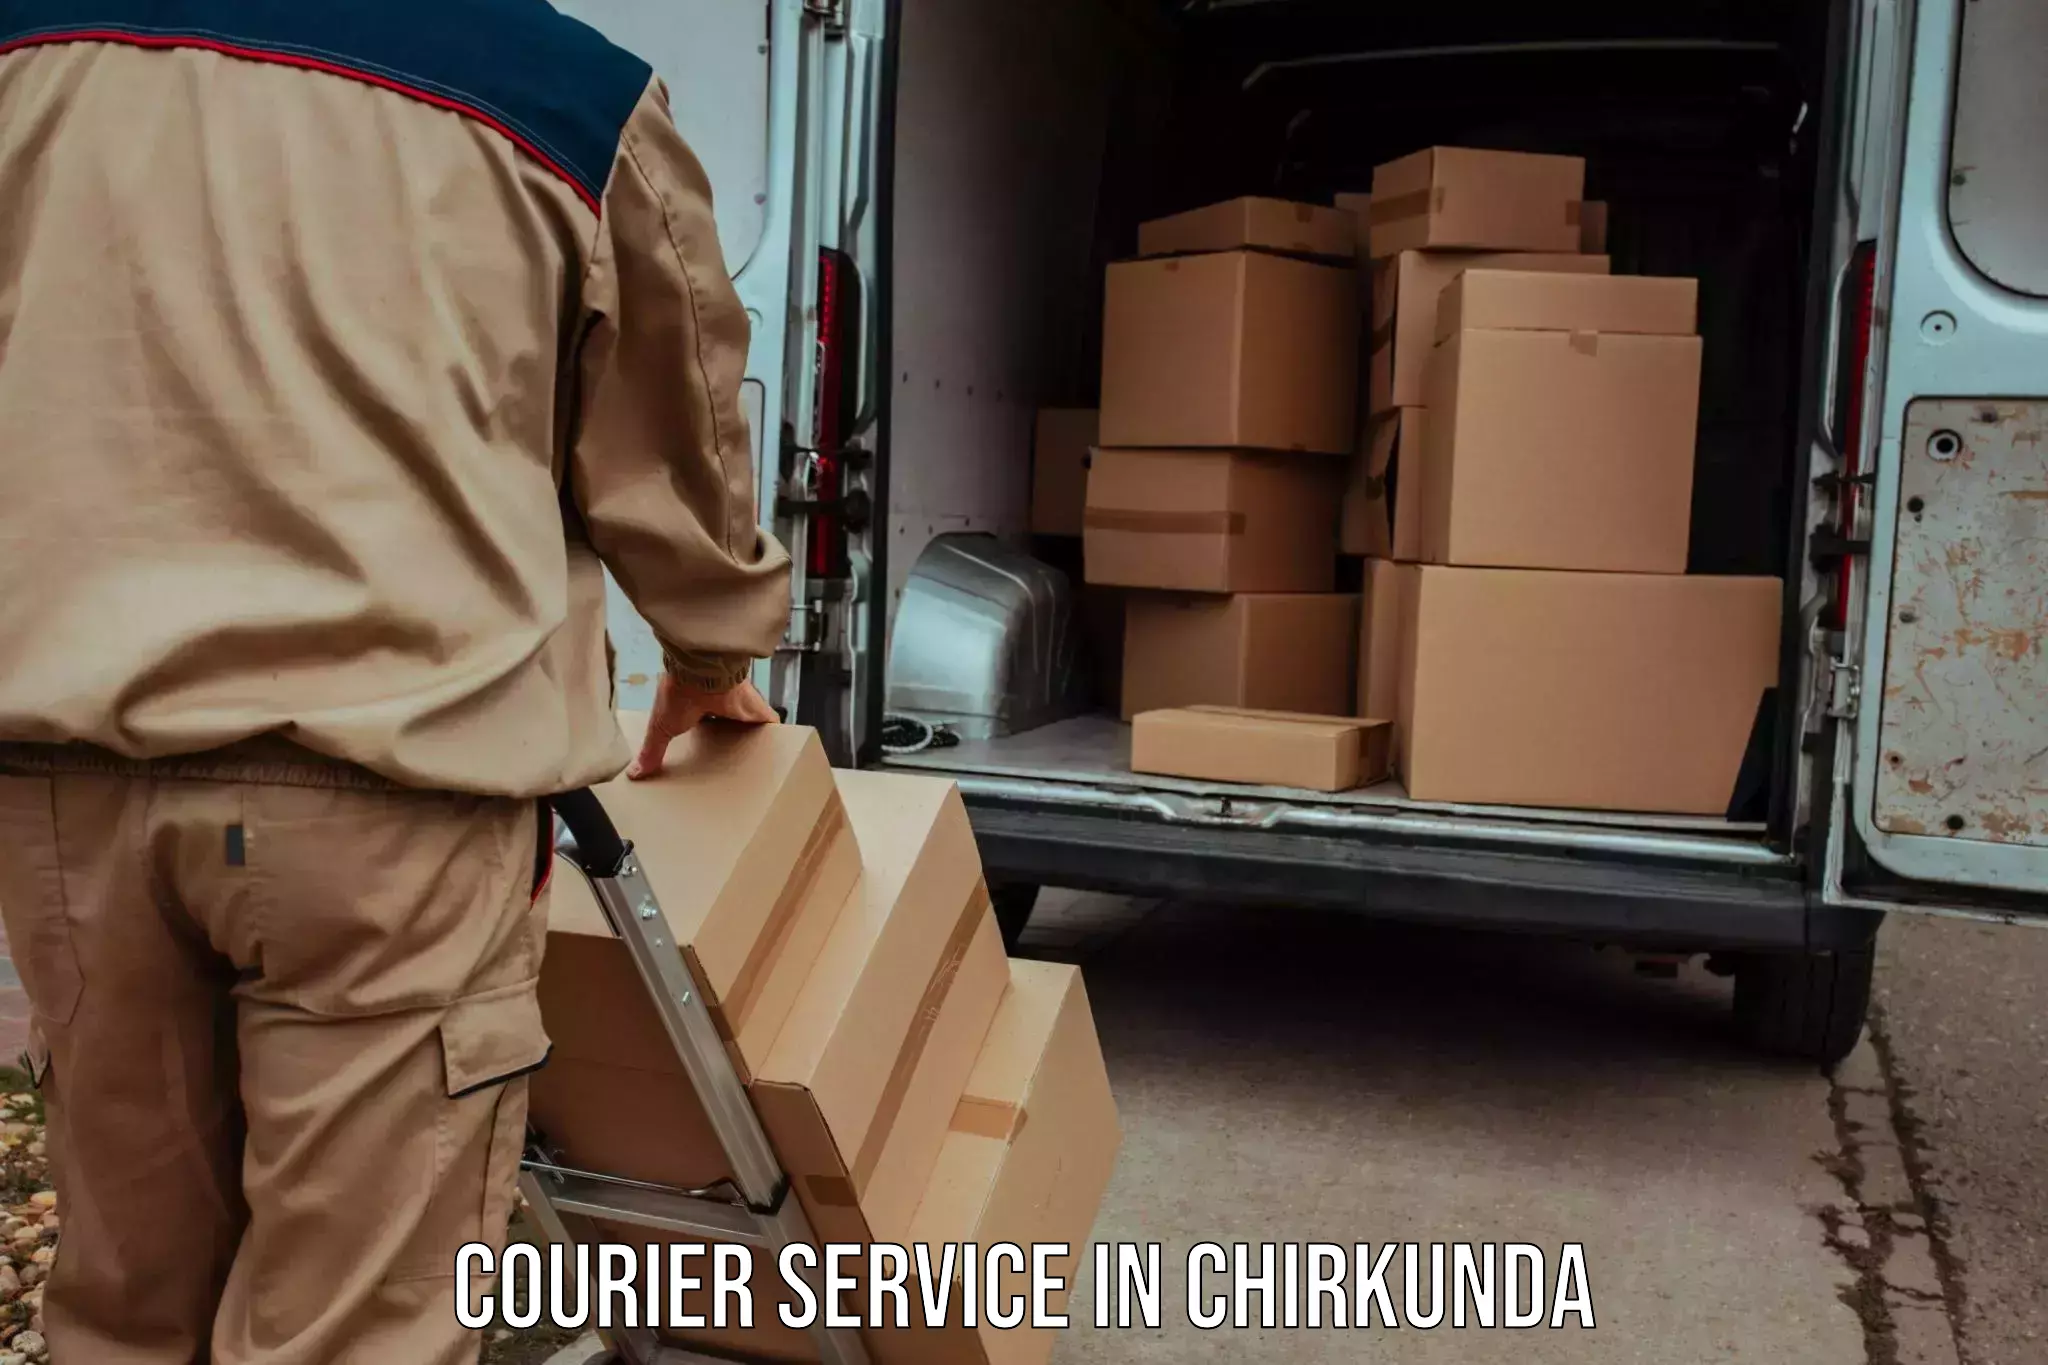 Customer-focused courier in Chirkunda